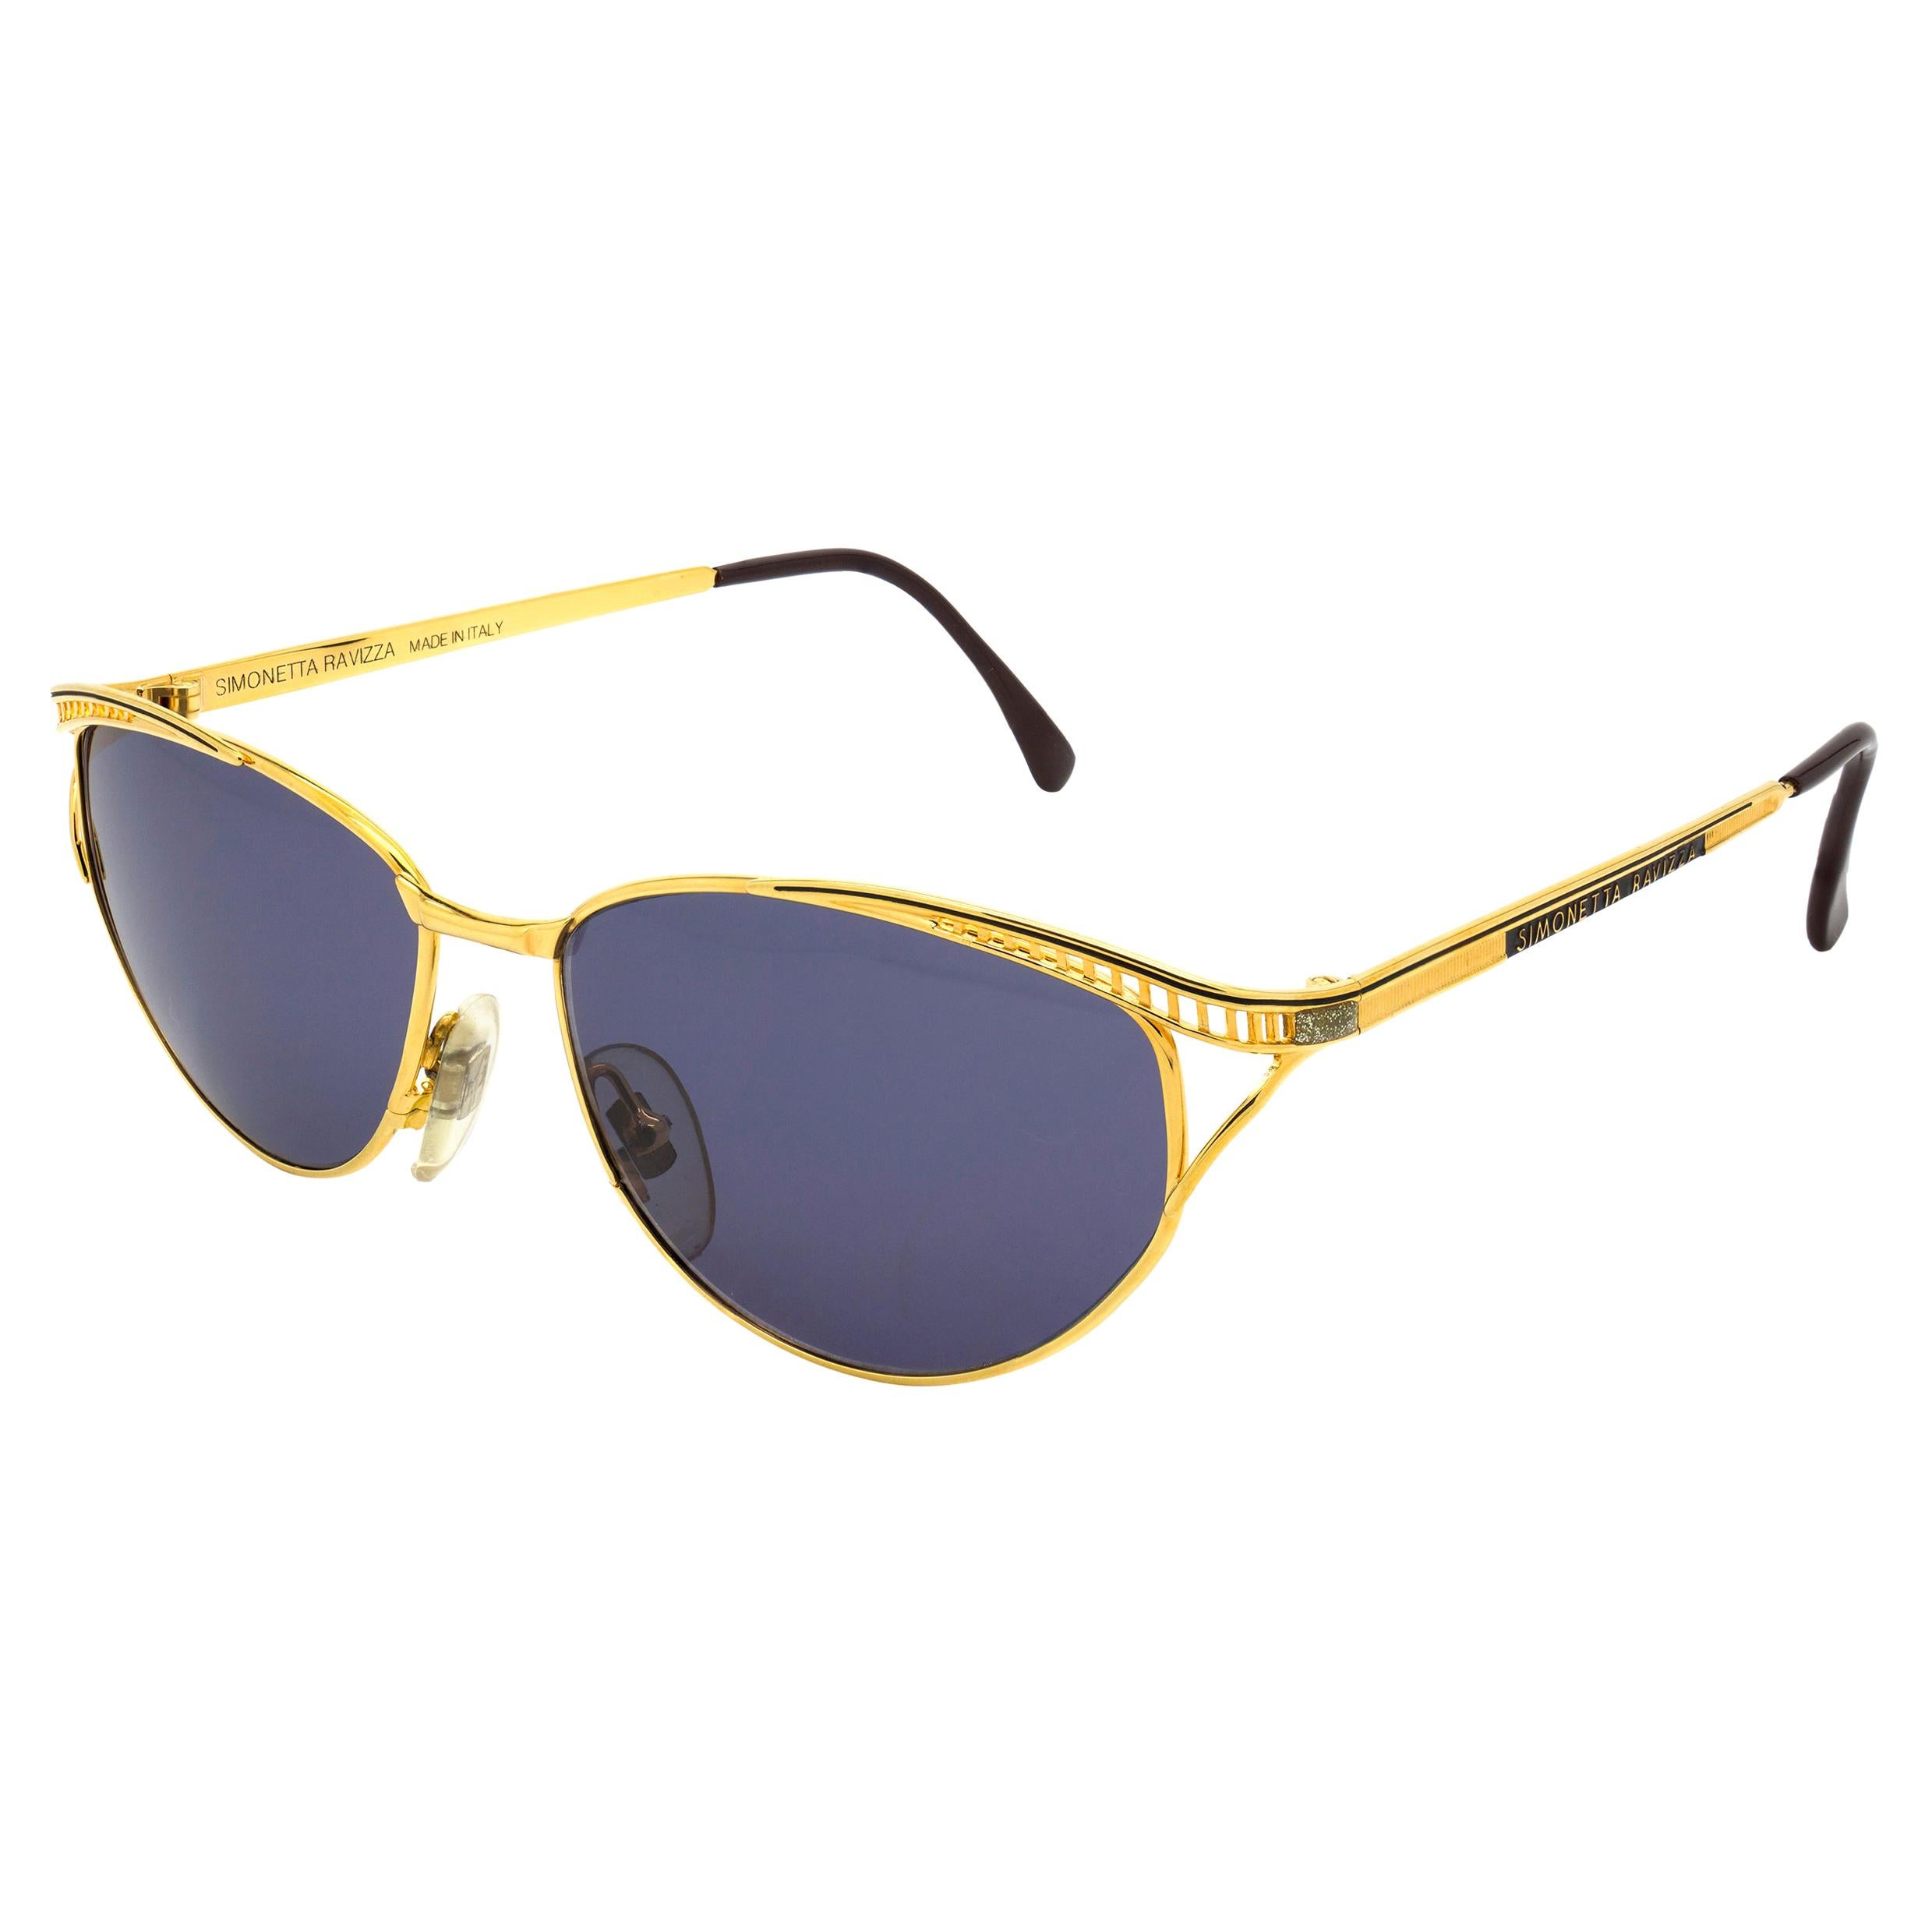 Simonetta Ravizza Goldene Sonnenbrille mit Katzenaugen im Angebot